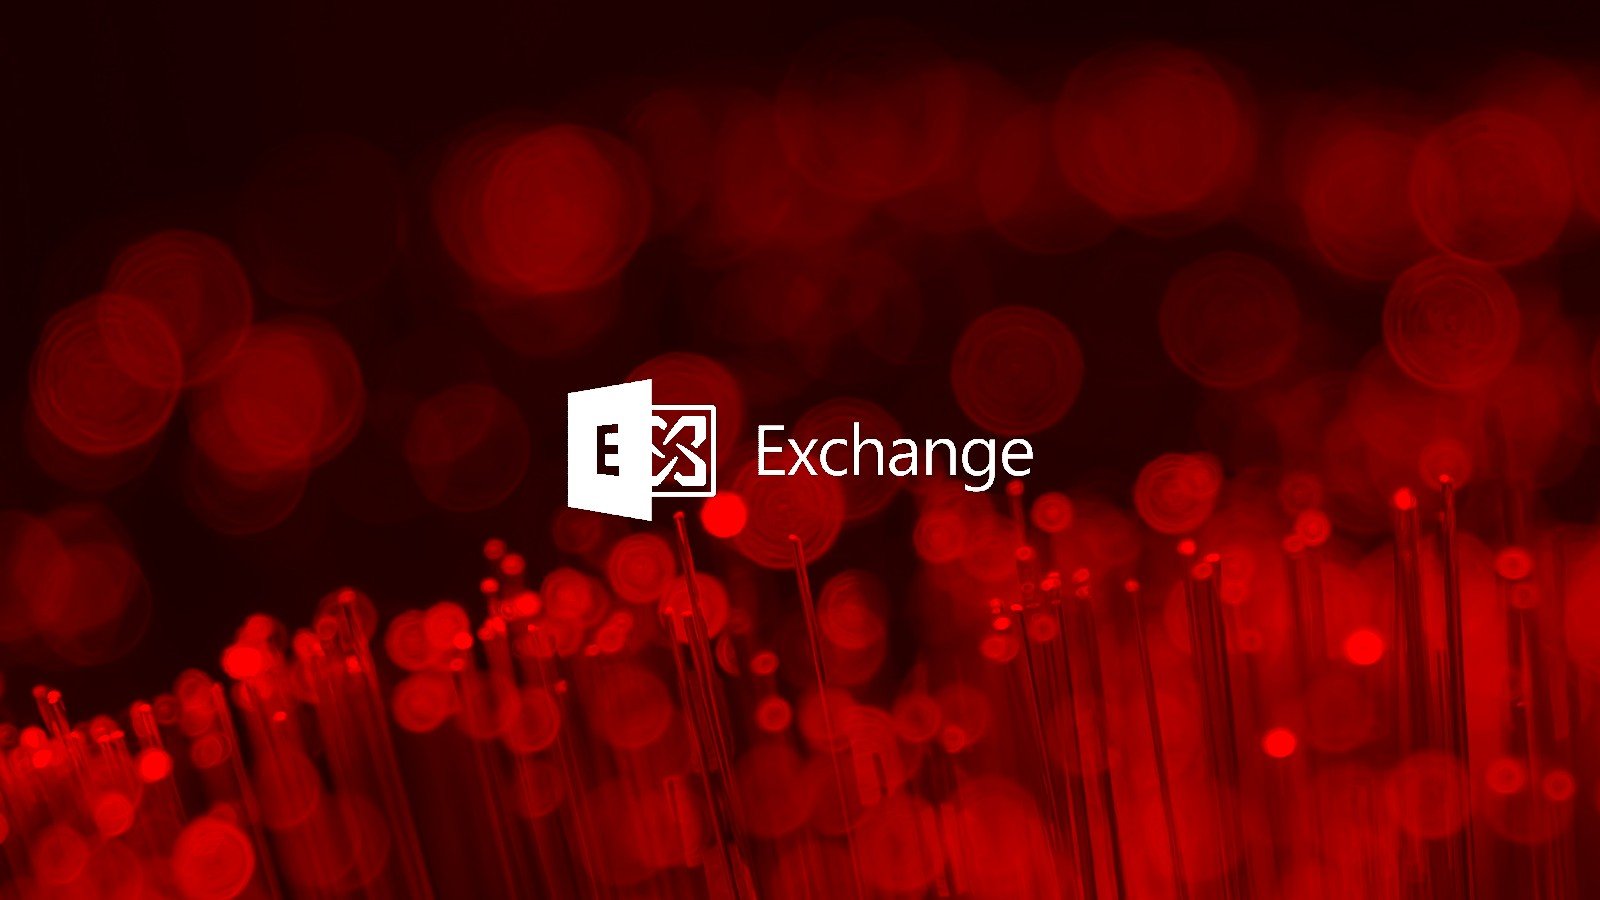 New Microsoft Exchange zero-days actively exploited in attacks - BleepingComputer